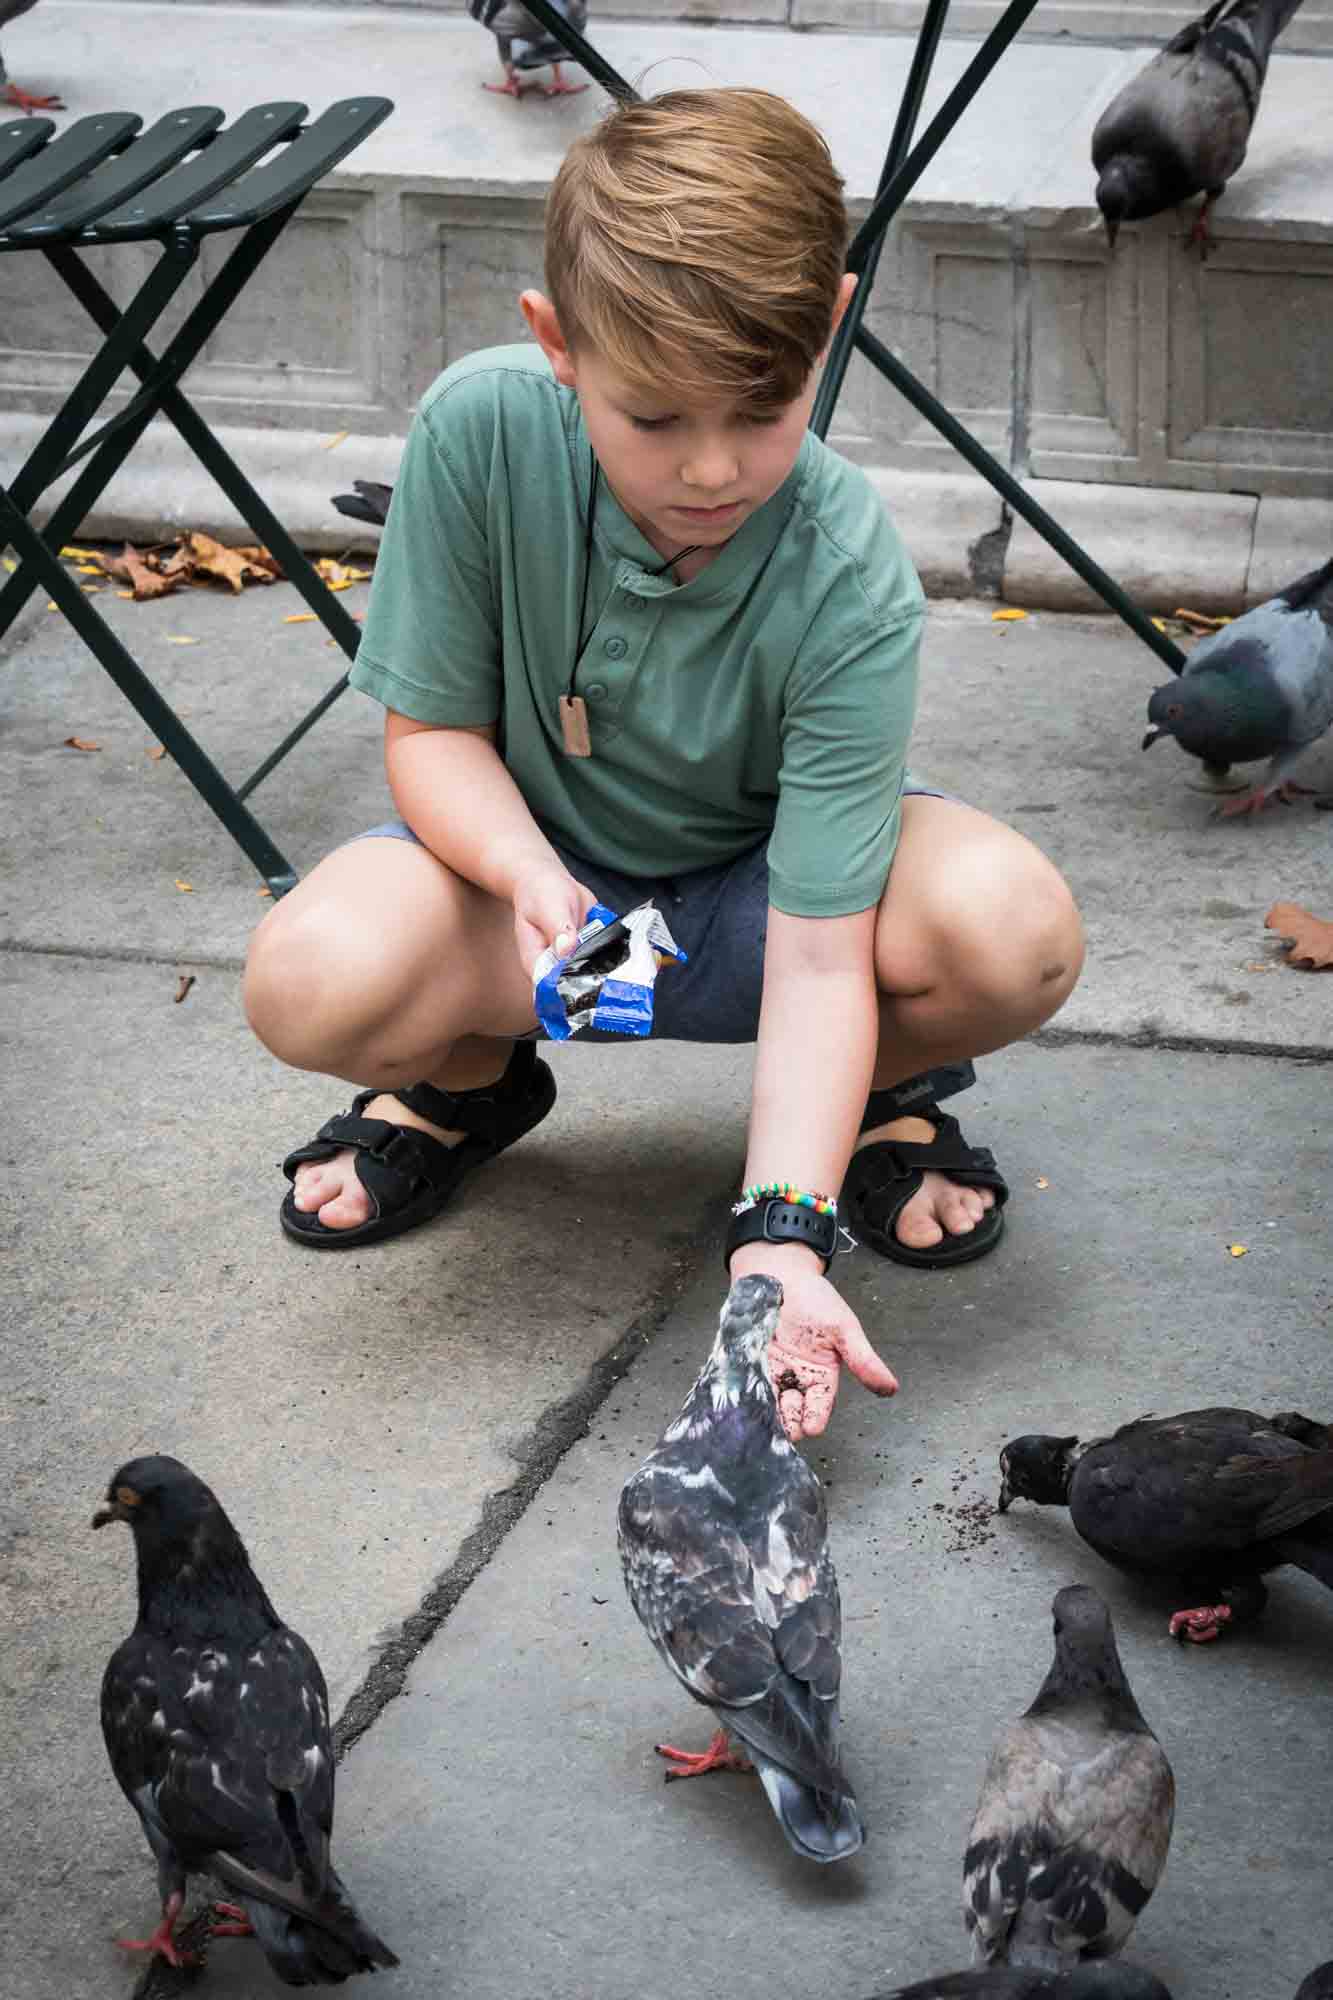 Boy feeding pigeon by hand in NYC